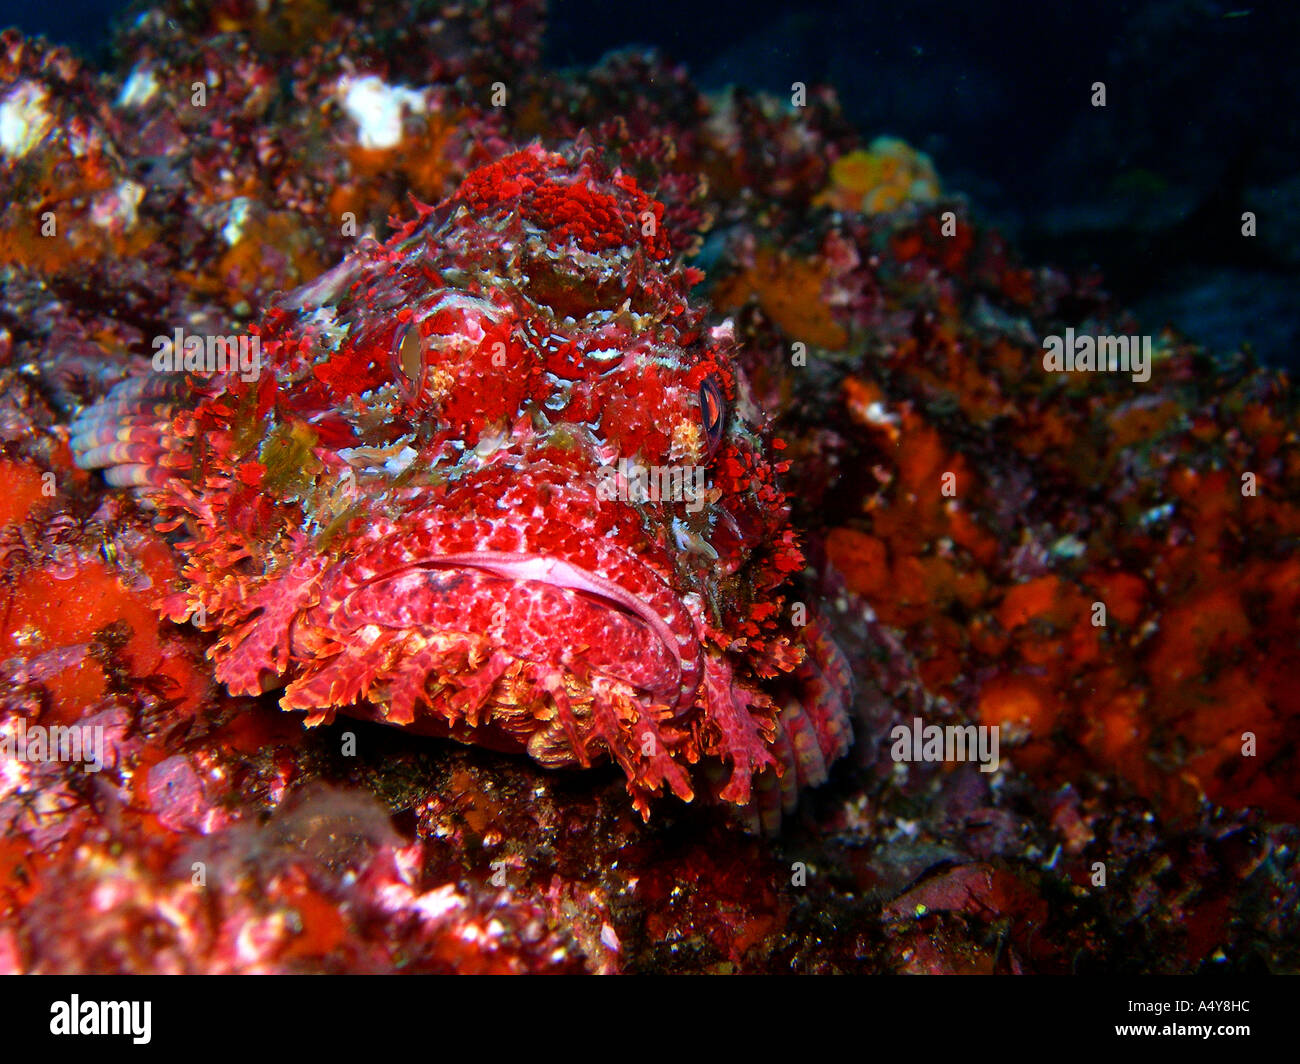 scorpion fish camouflage animal Stock Photo